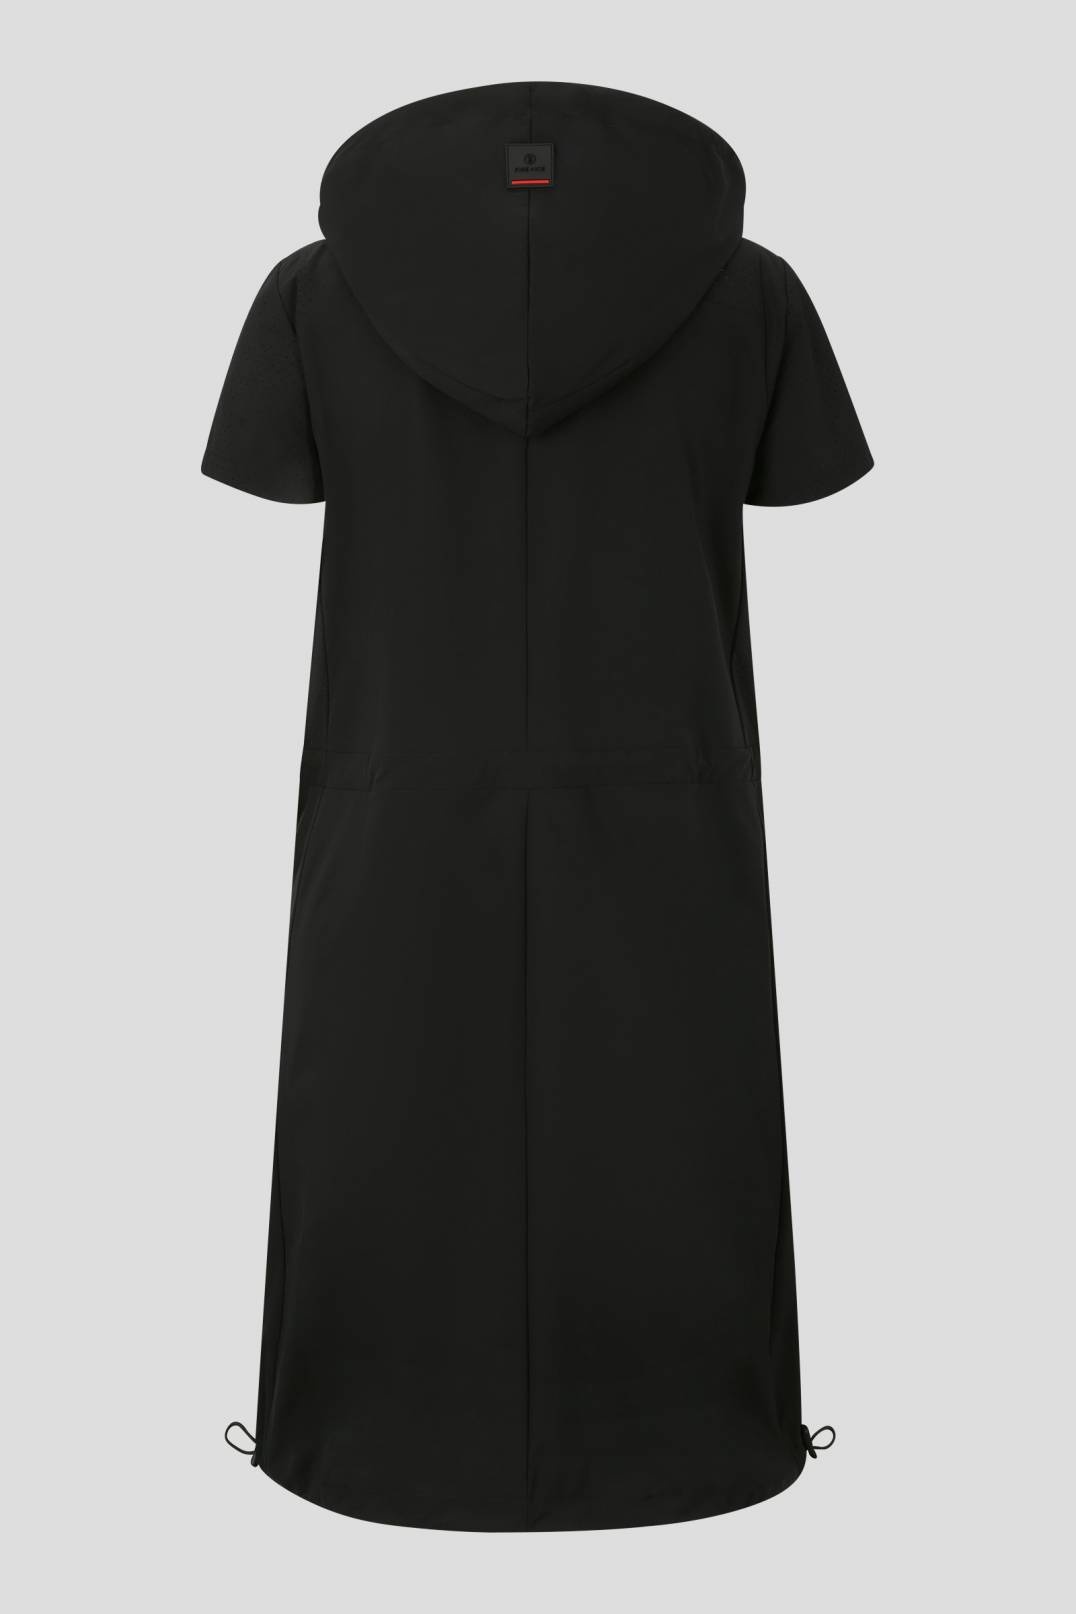 VALENTINA FUNCTIONAL DRESS IN BLACK - 5